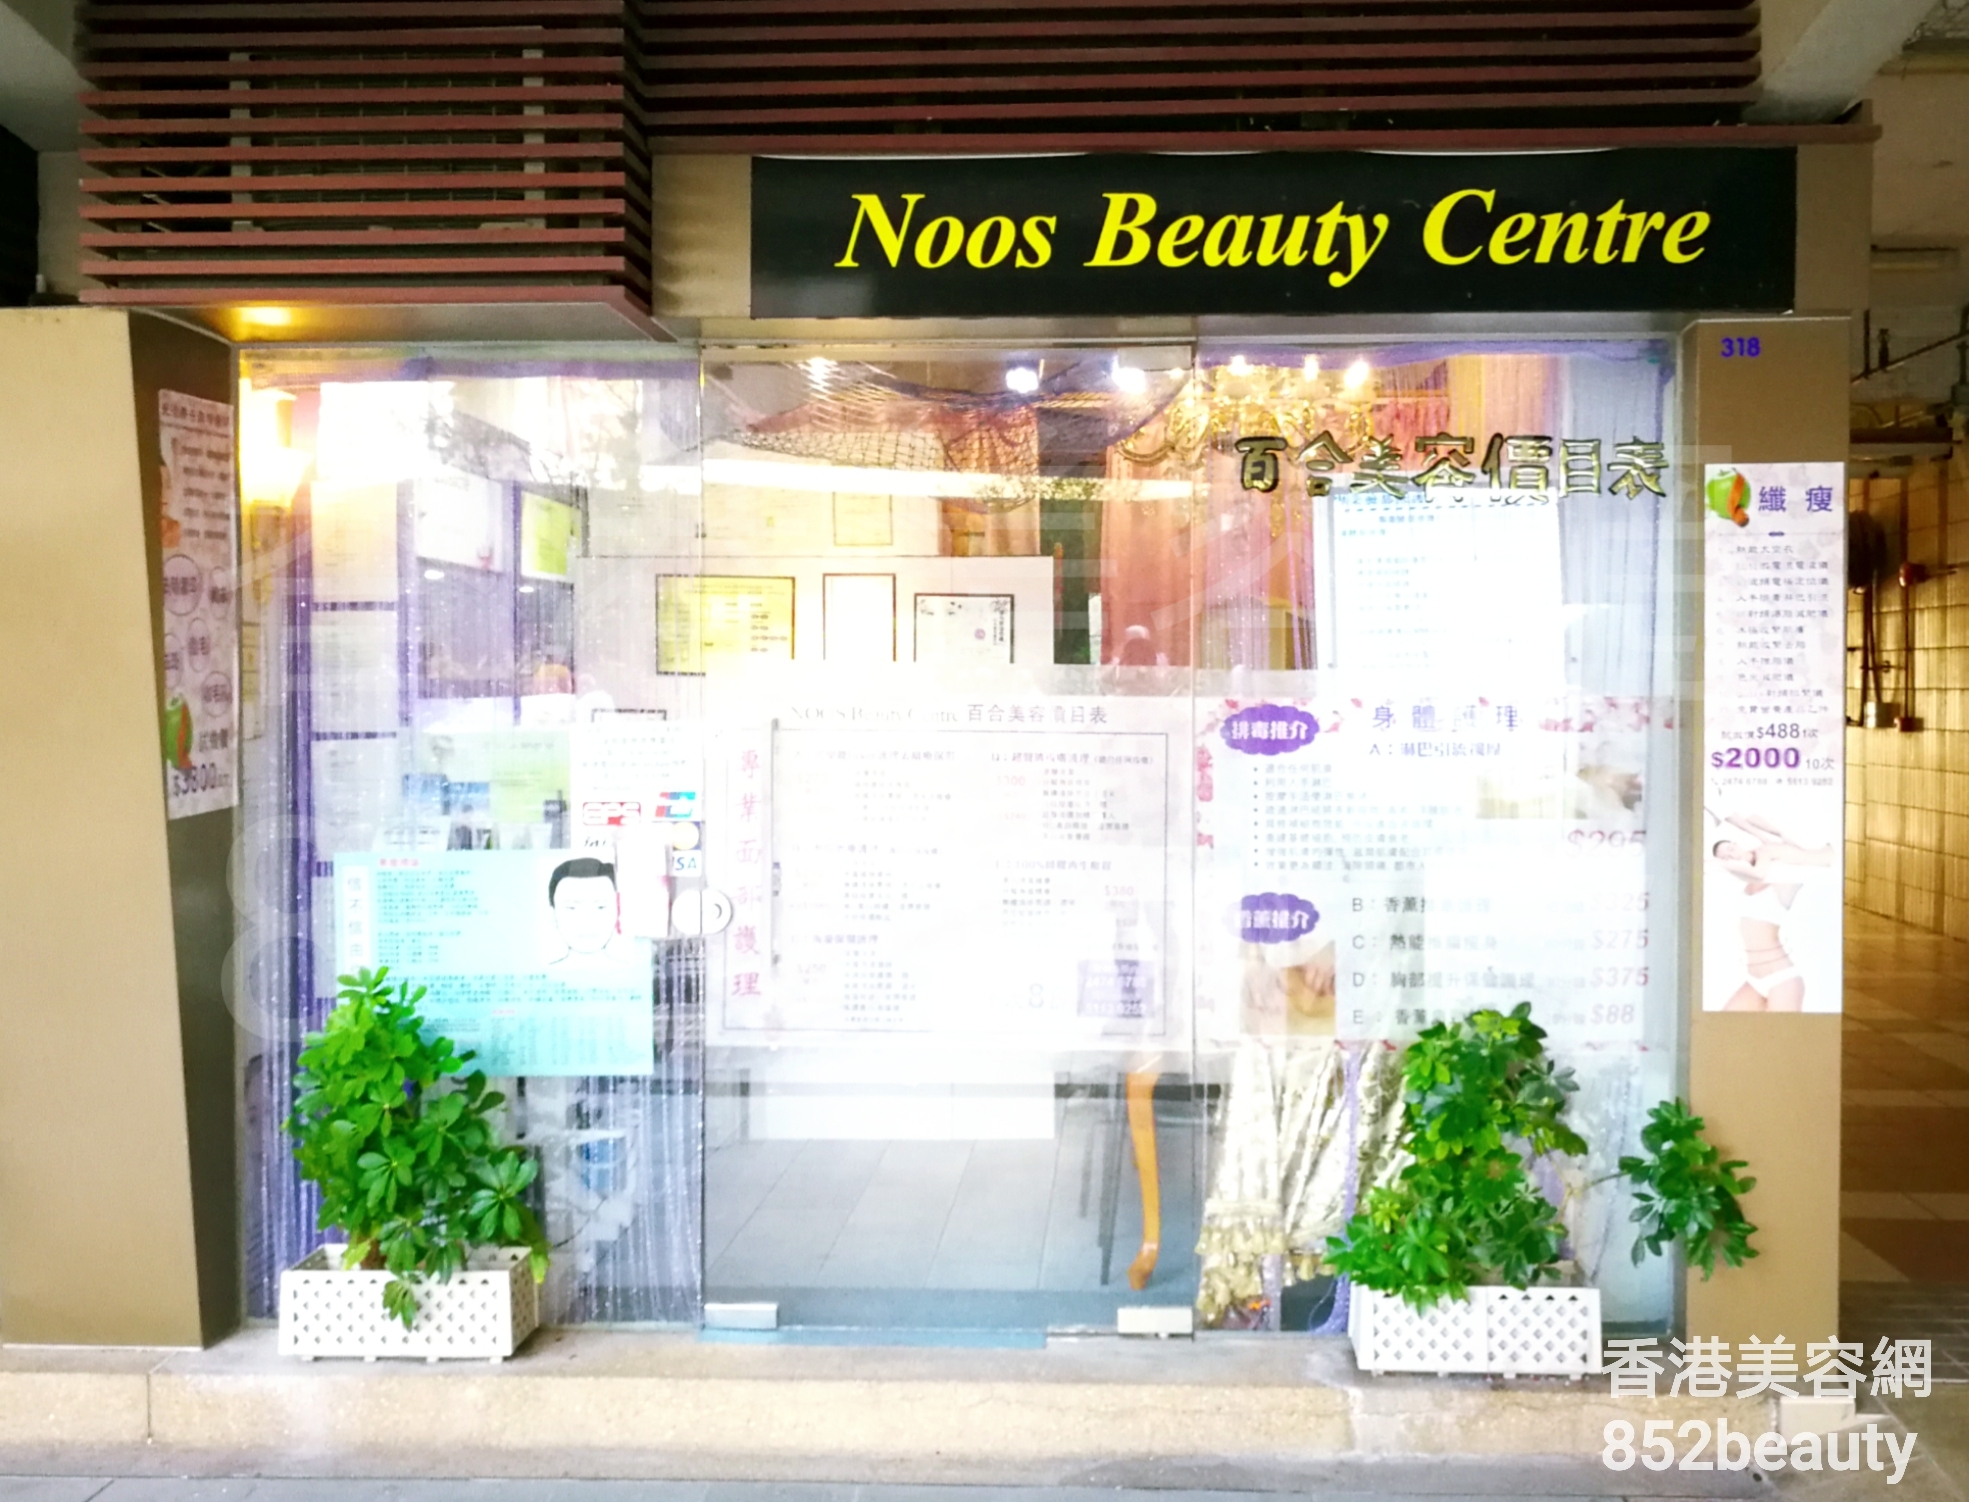 面部護理: Noos Beauty Centre